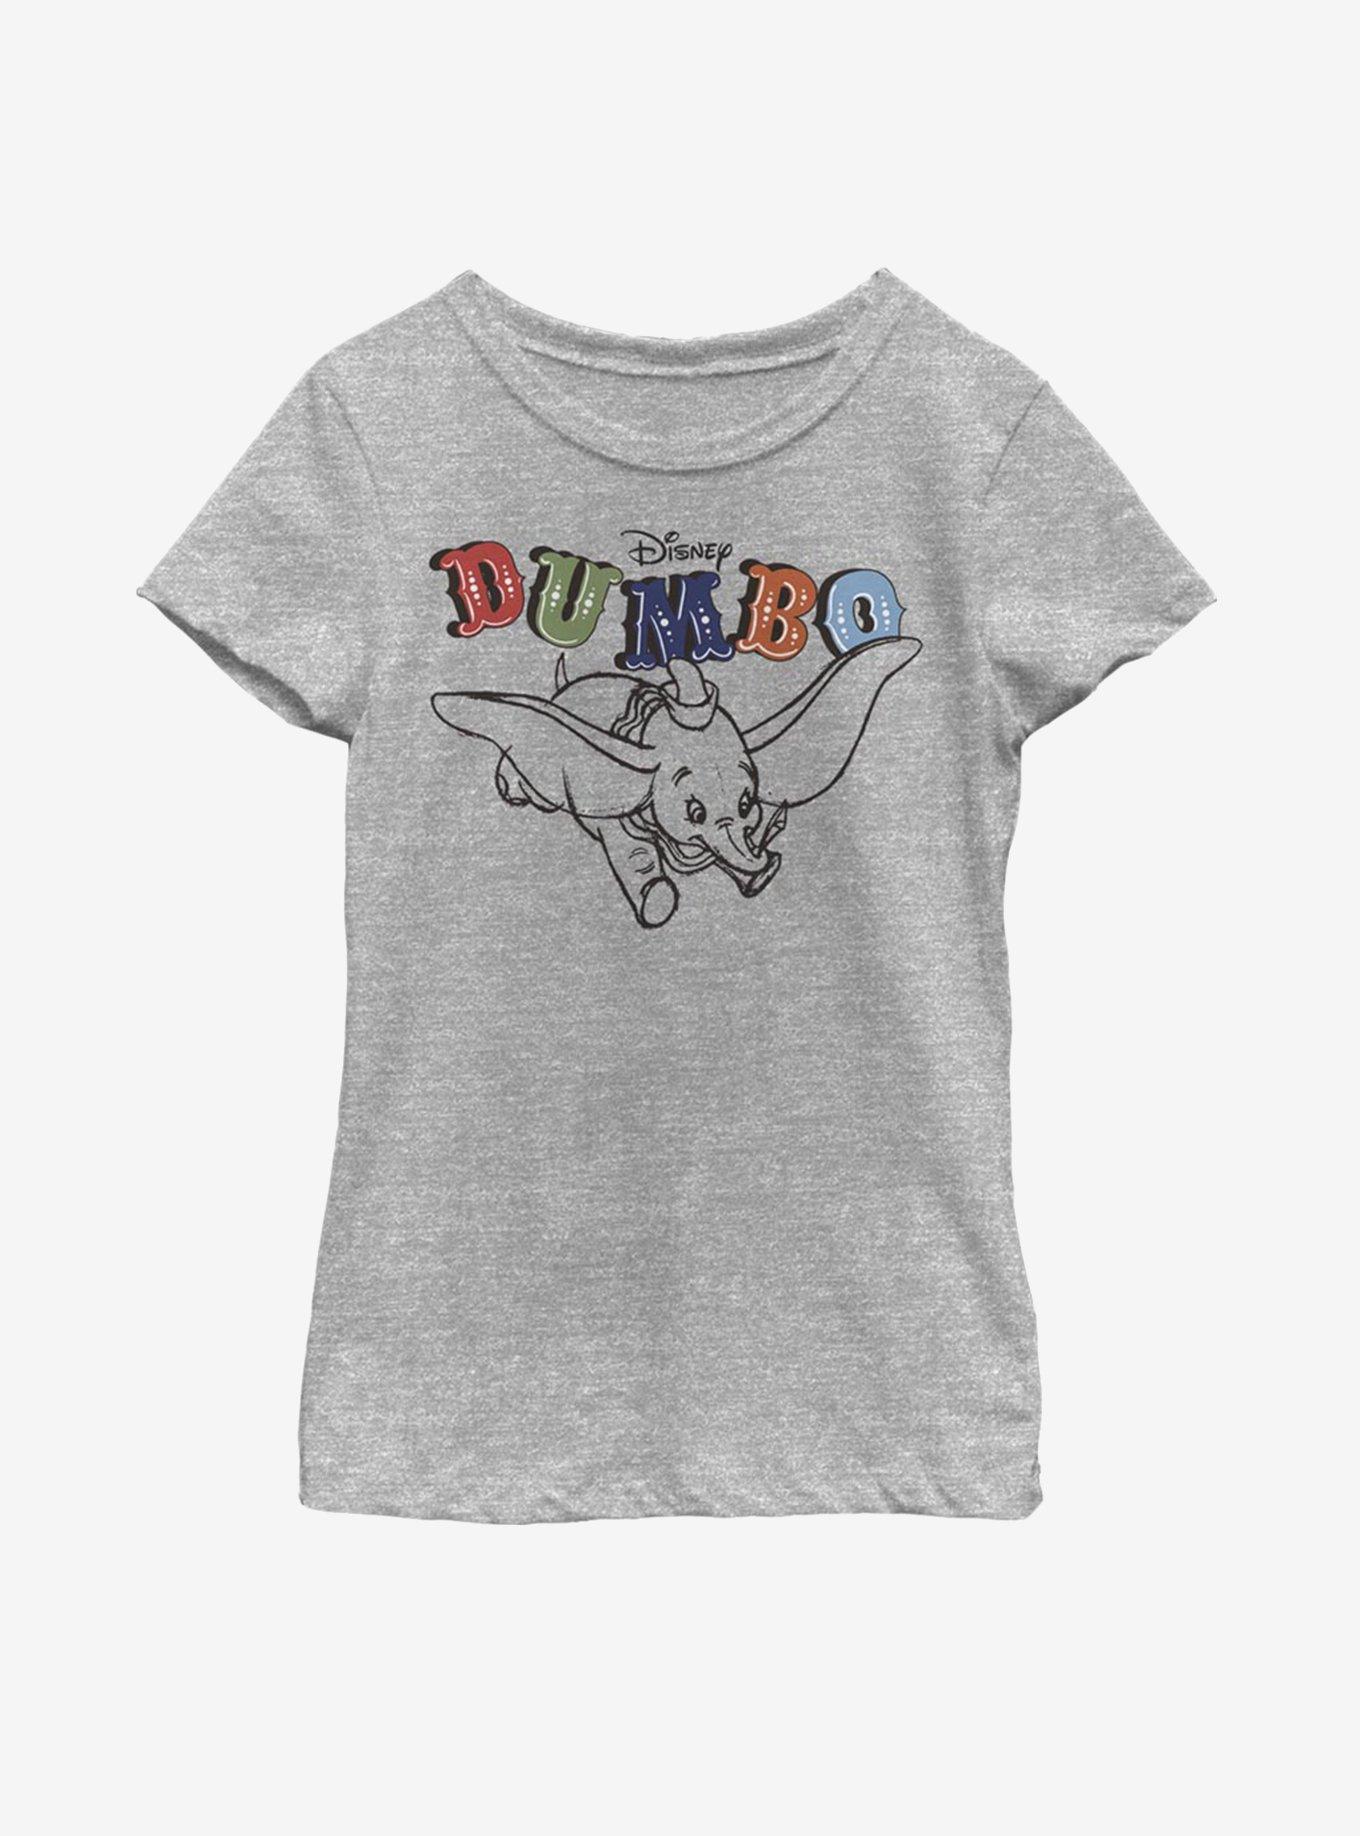 Disney Dumbo Flying Circus Youth Girls T-Shirt, ATH HTR, hi-res